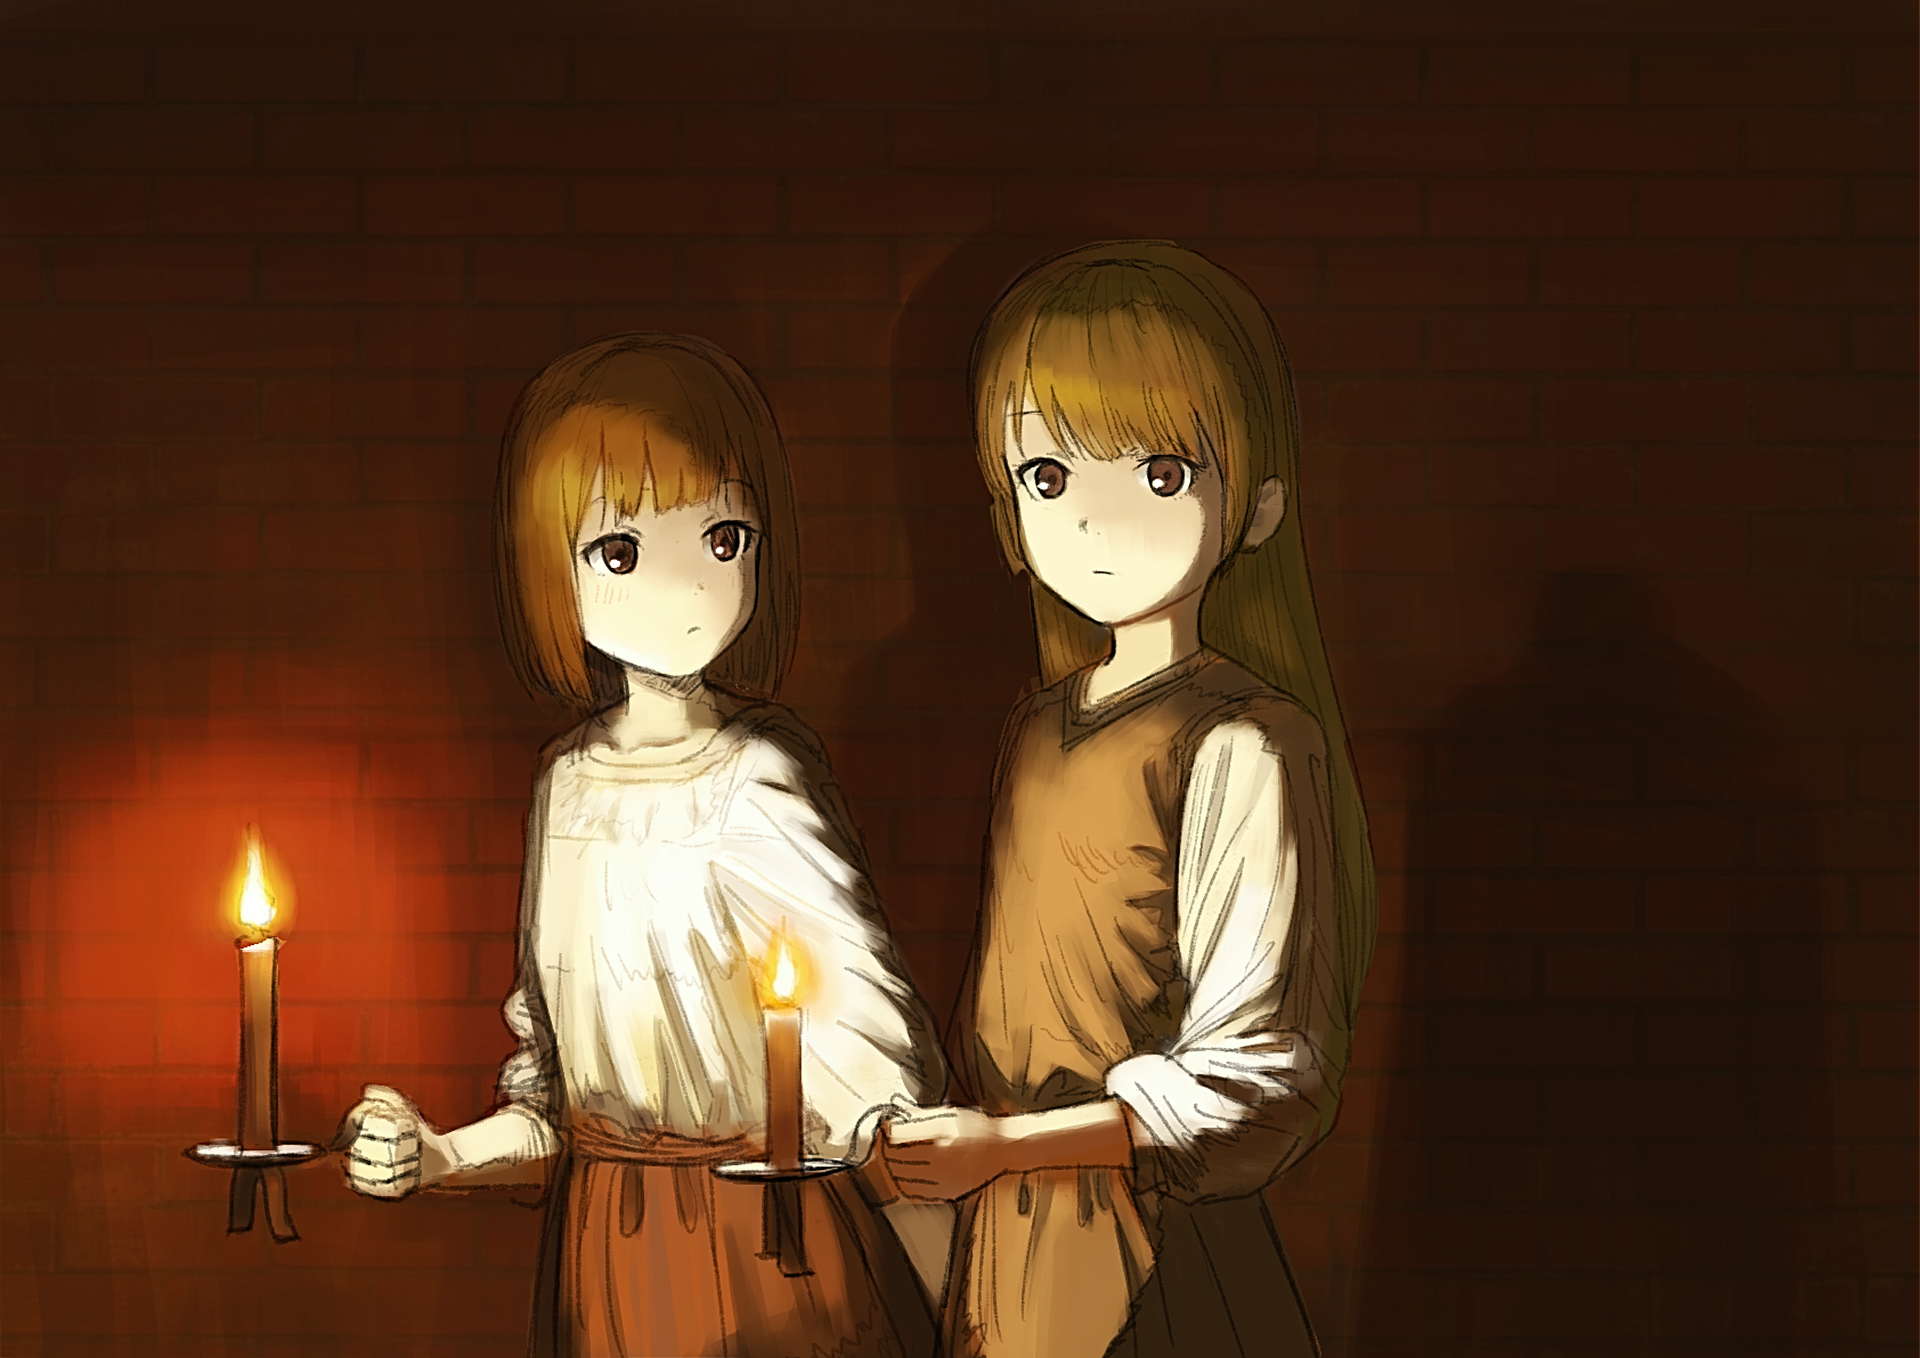 Candles - Anime Style by HowellJenkinsSama on DeviantArt